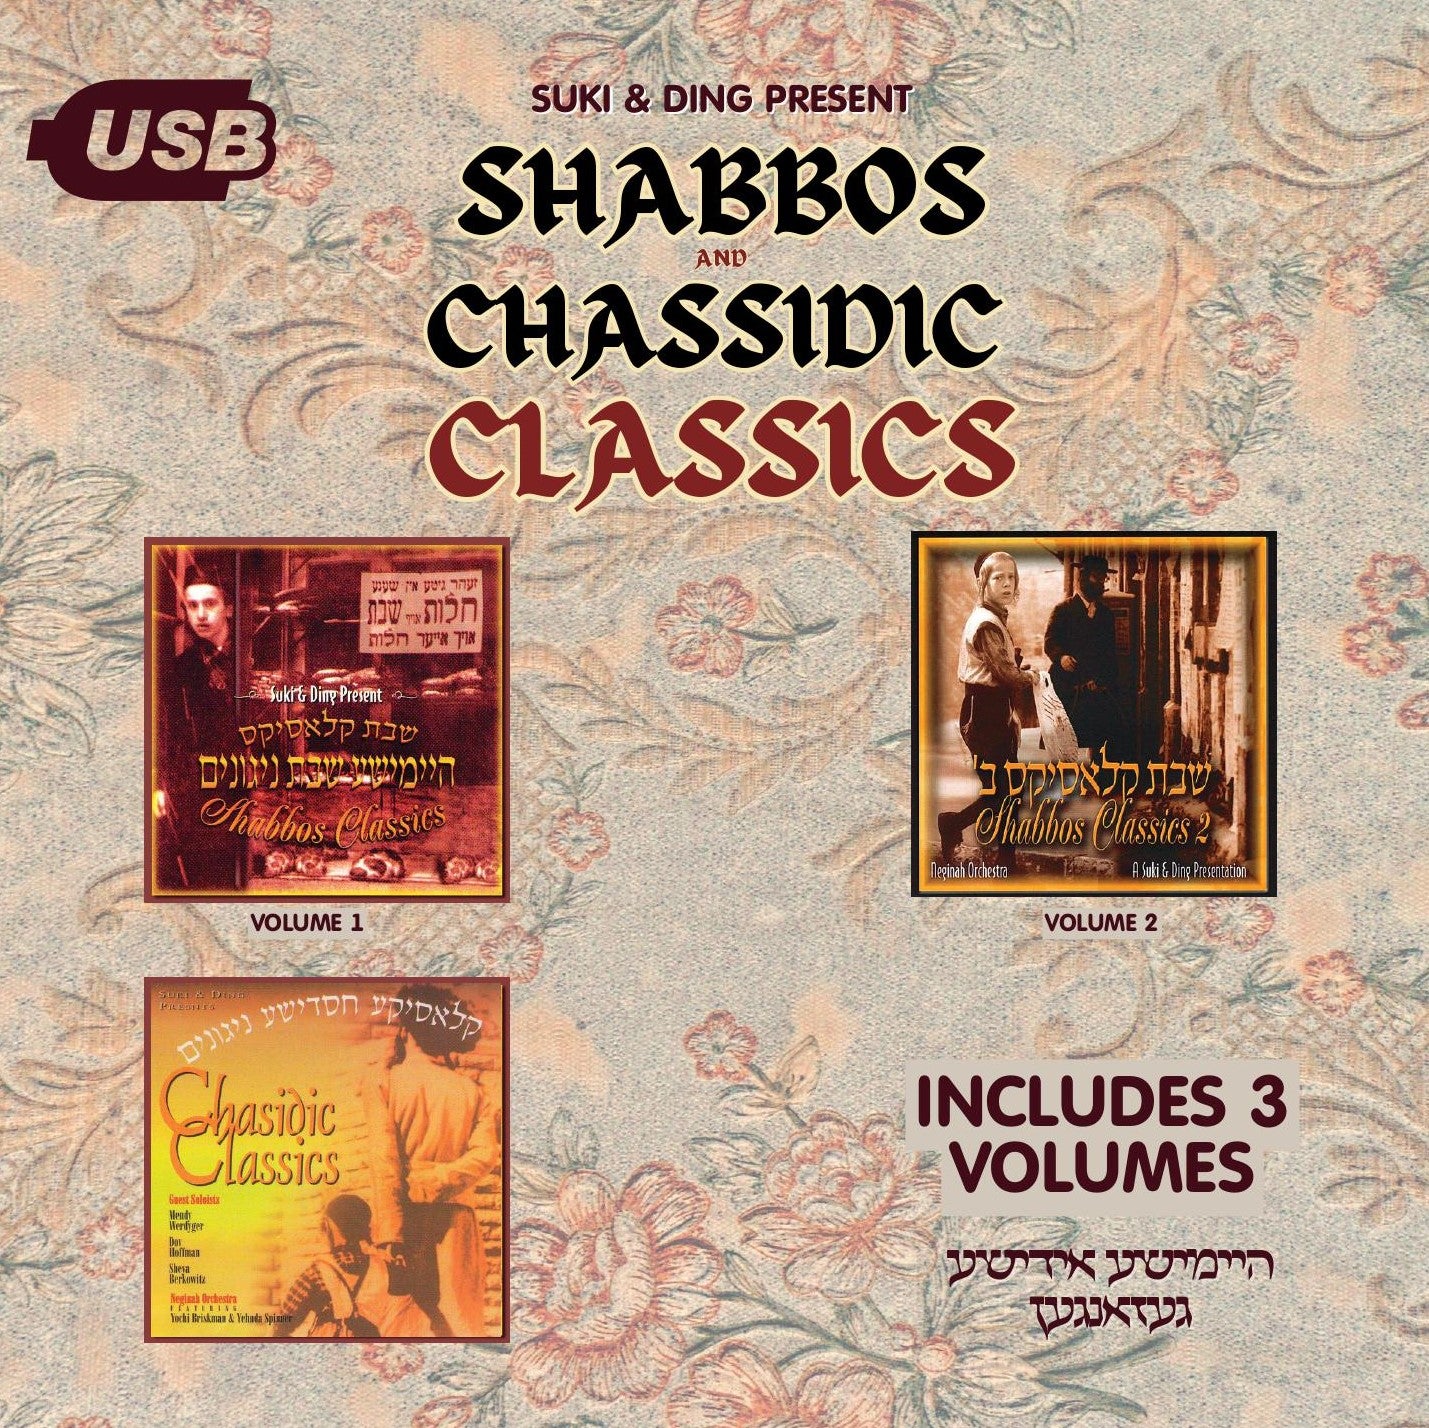 All Star - Shabbos & Chassidic Classics (USB)